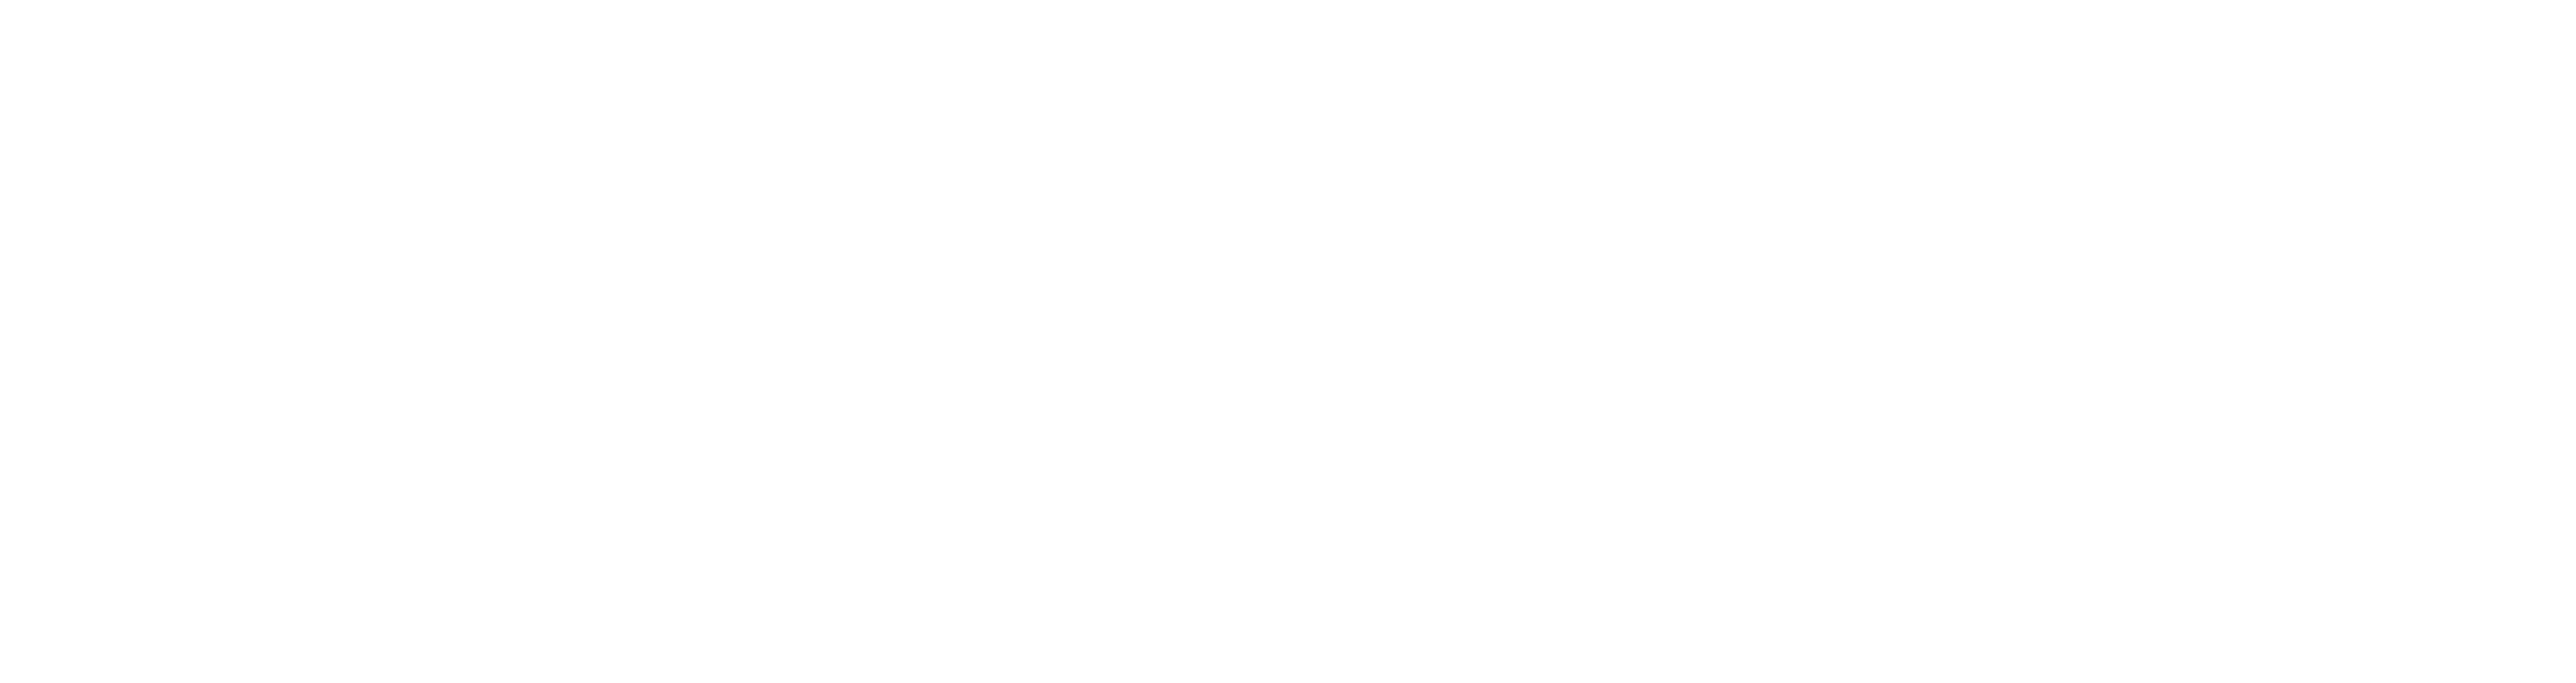 Assurance Health System